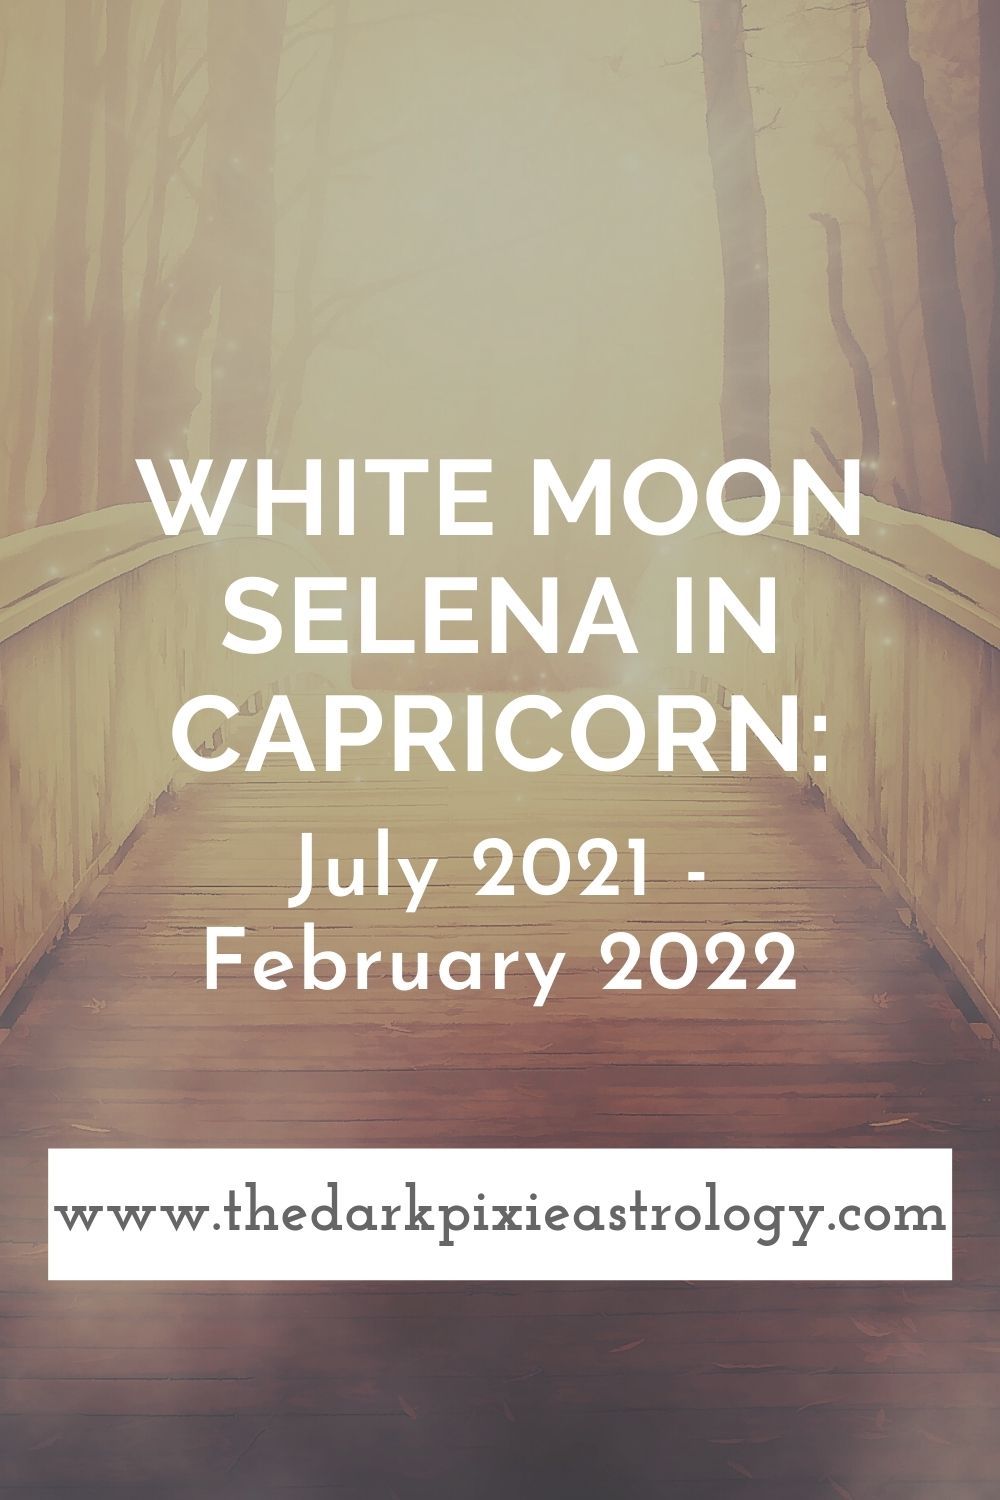 White Moon Selena in Capricorn: July 2021 - February 2022 - The Dark Pixie Astrology